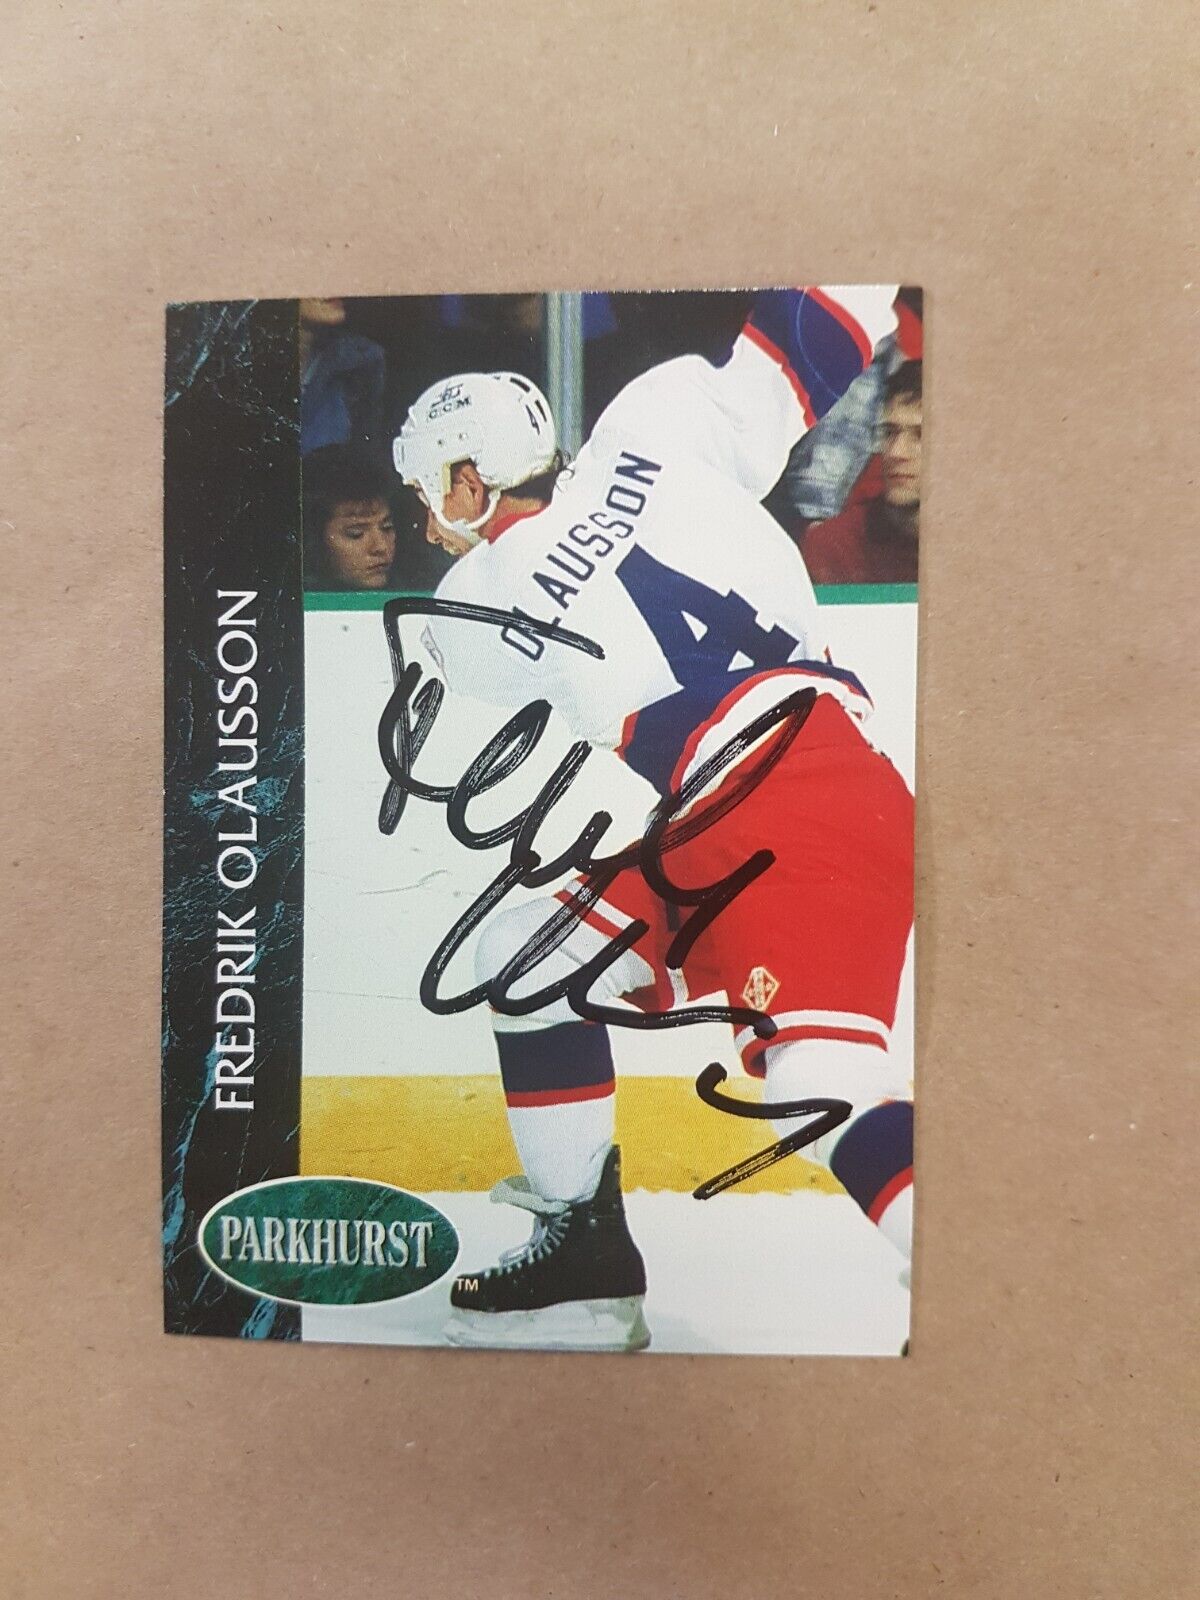 Fredrik Olausson Autograph Card Signed Hockey Parkhurst 212 1993 Proset